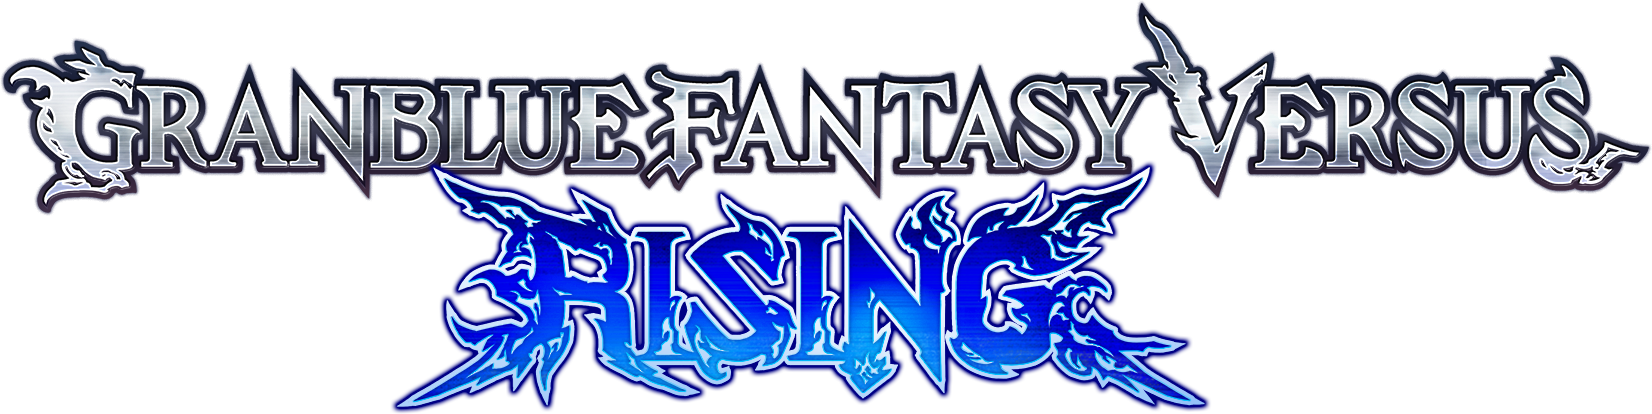 Granblue Fantasy Versus: Open Beta do Rising tem datas anunciadas - Round 1